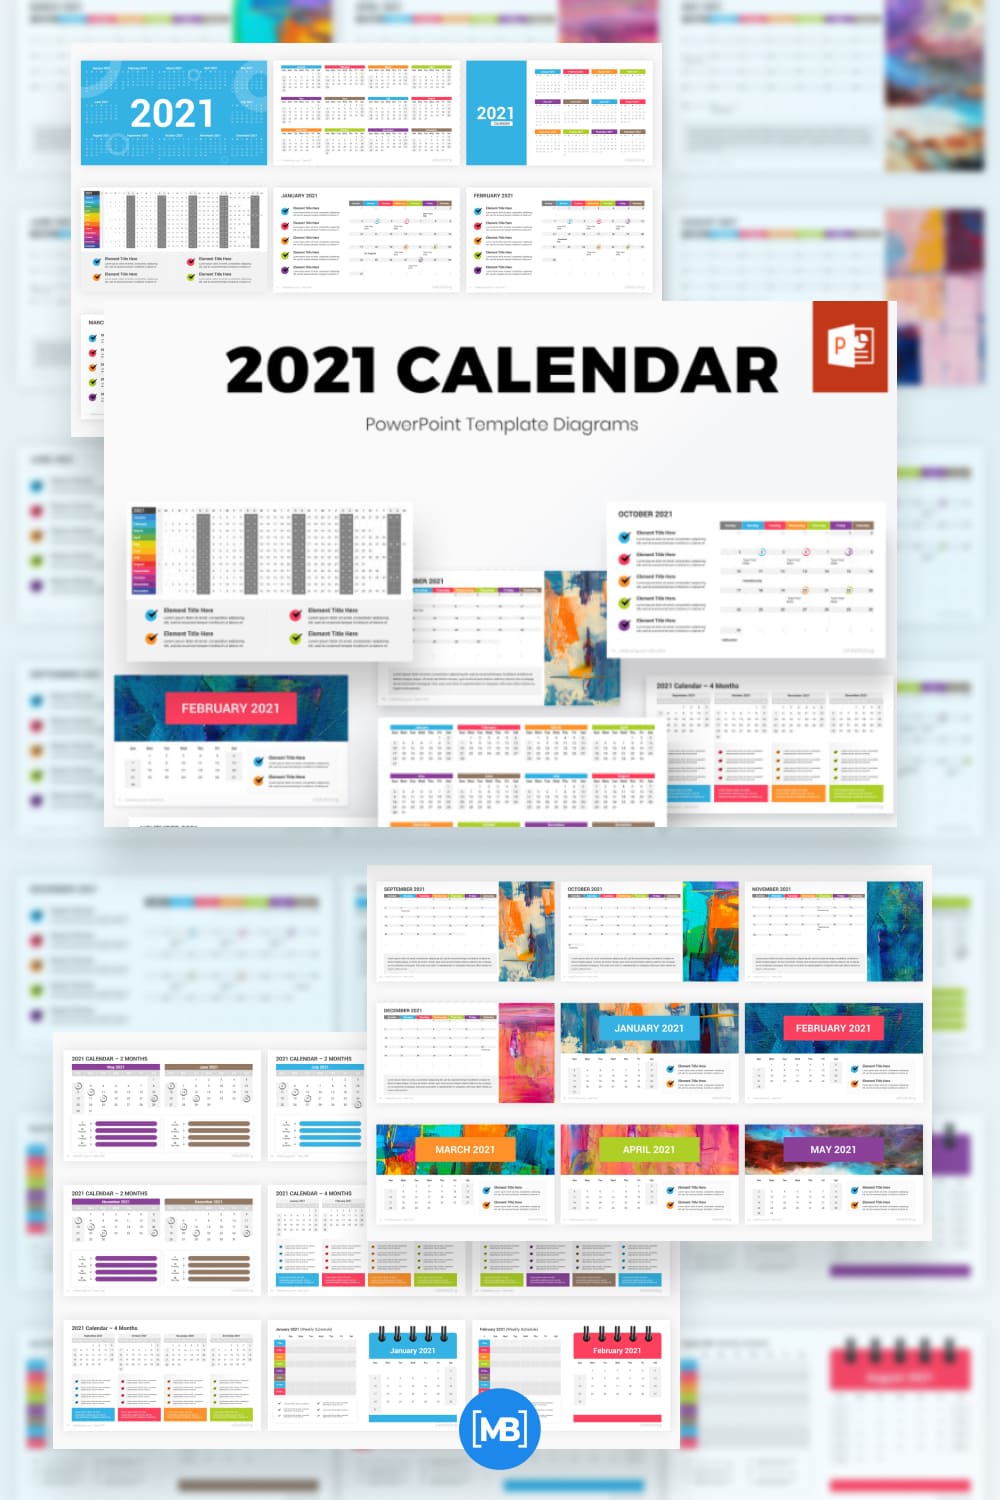 2021 calendar powerpoint diagrams.